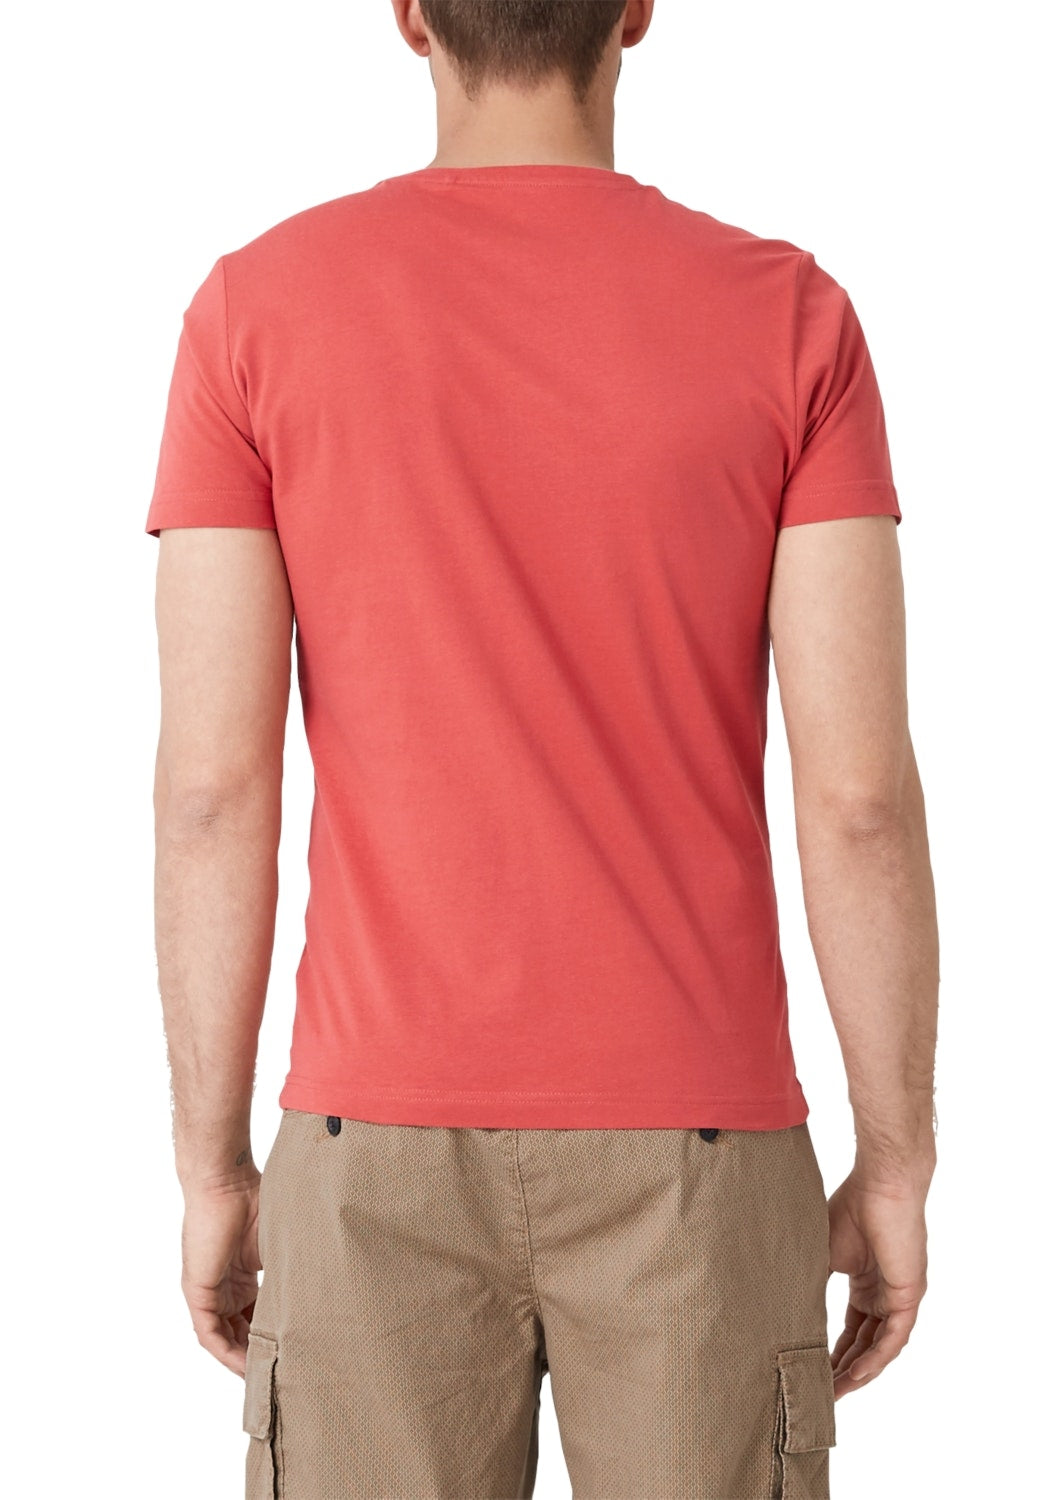 T-shirt short sleeves